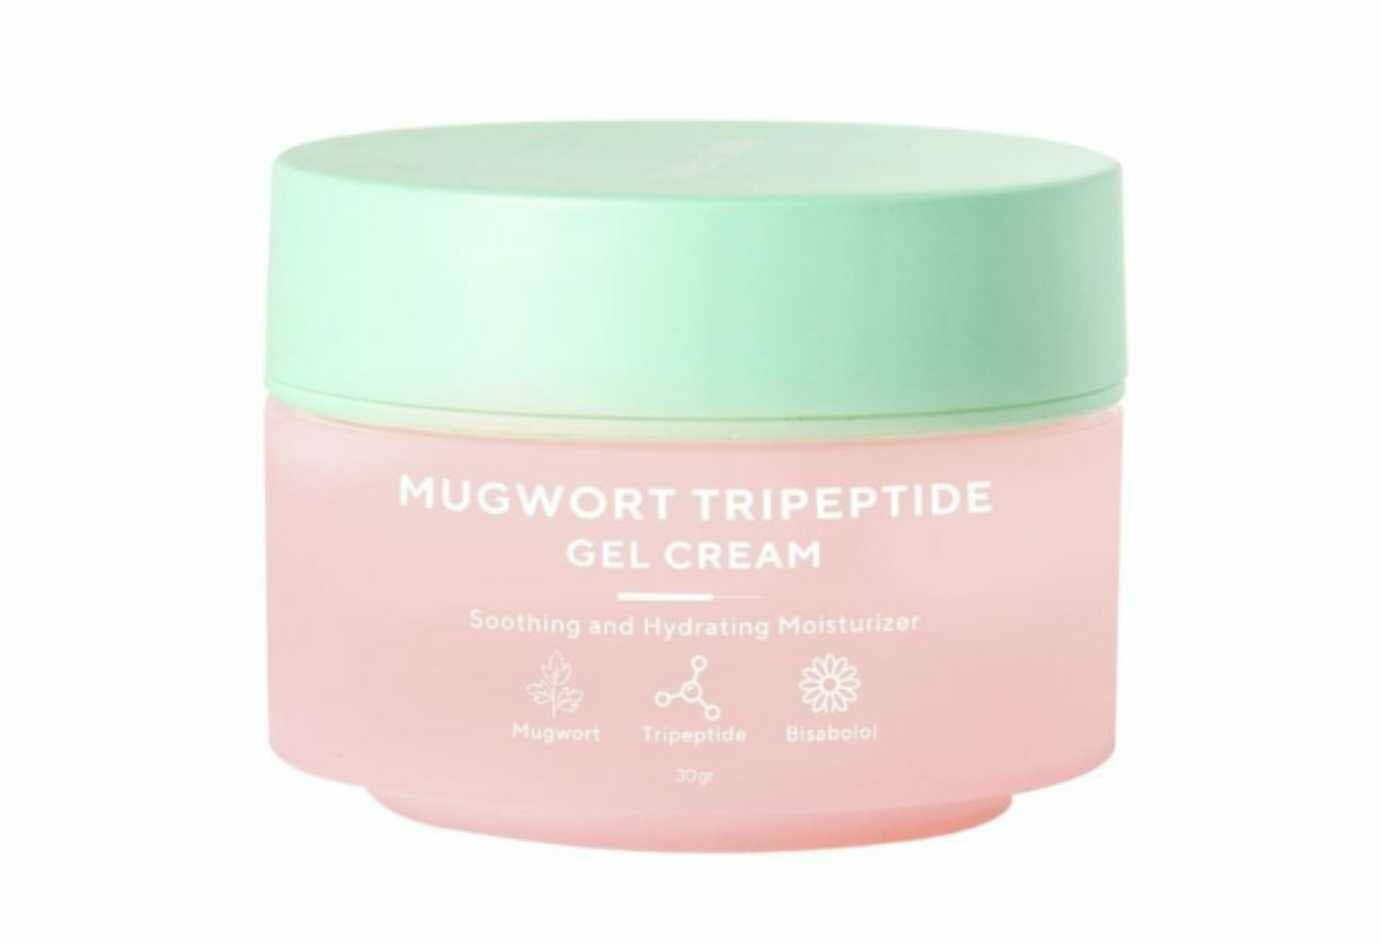 Mugwort Tripeptide Moisturizer Gel Cream